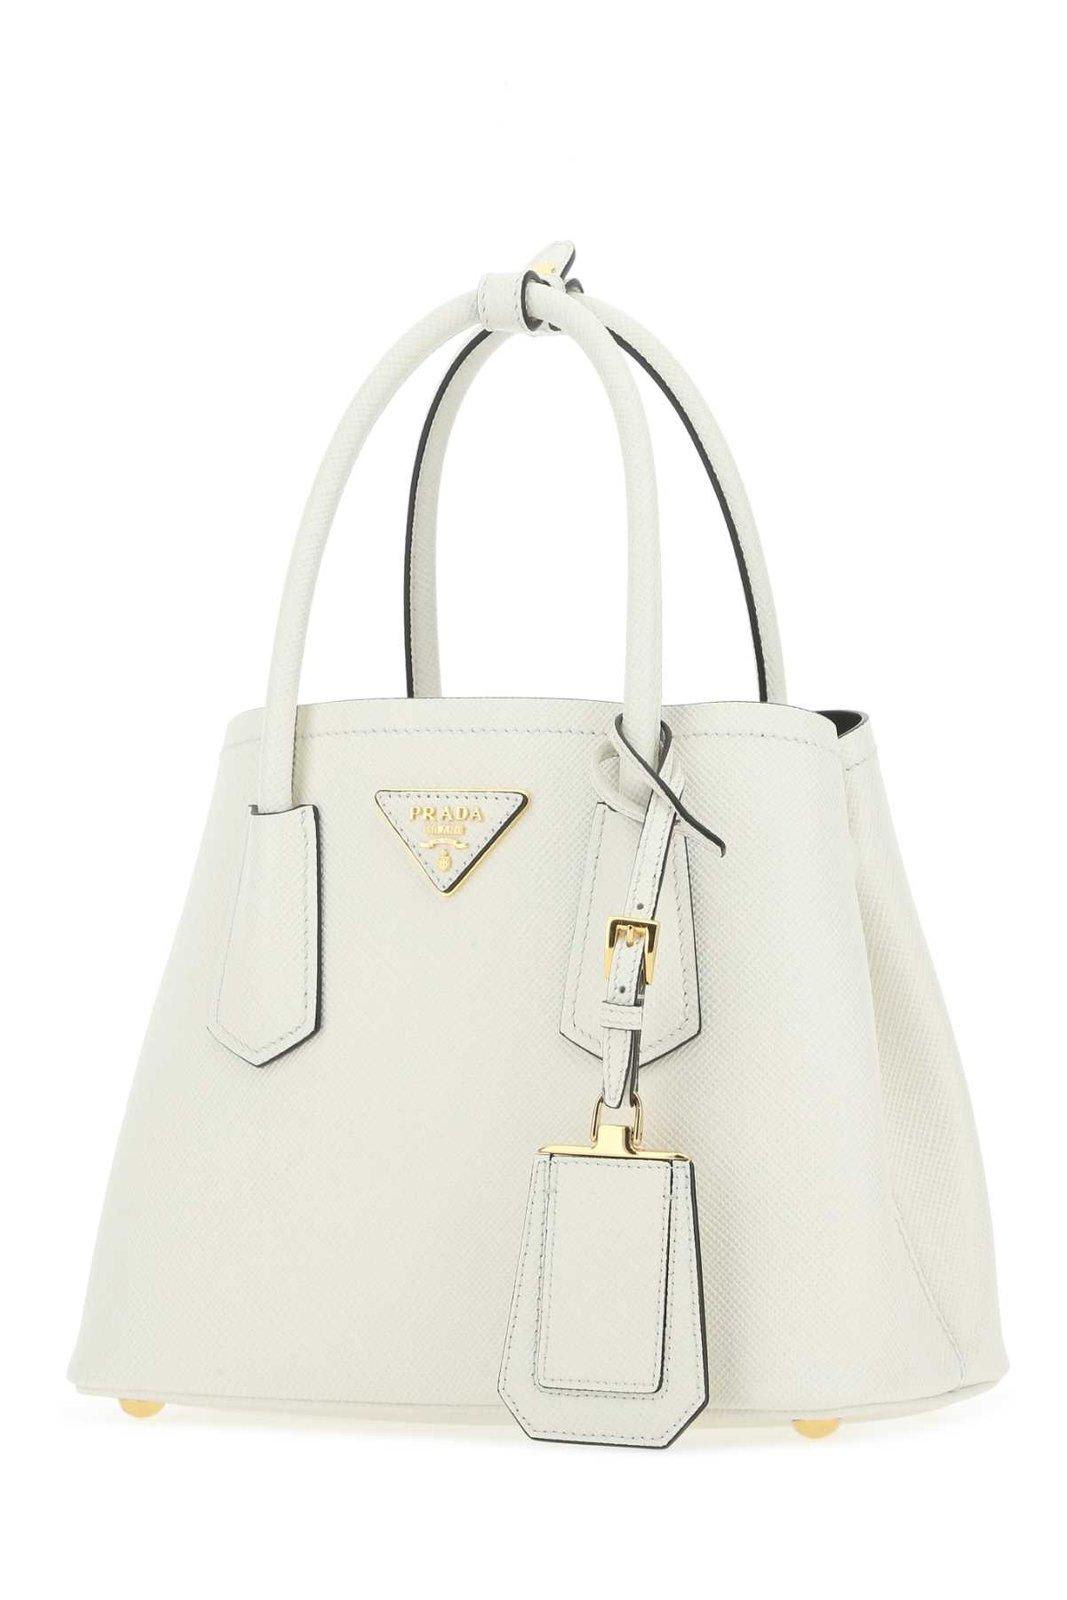 Prada Saffiano Cuir Medium Matinee Handle Bag - White Totes, Handbags -  PRA875784